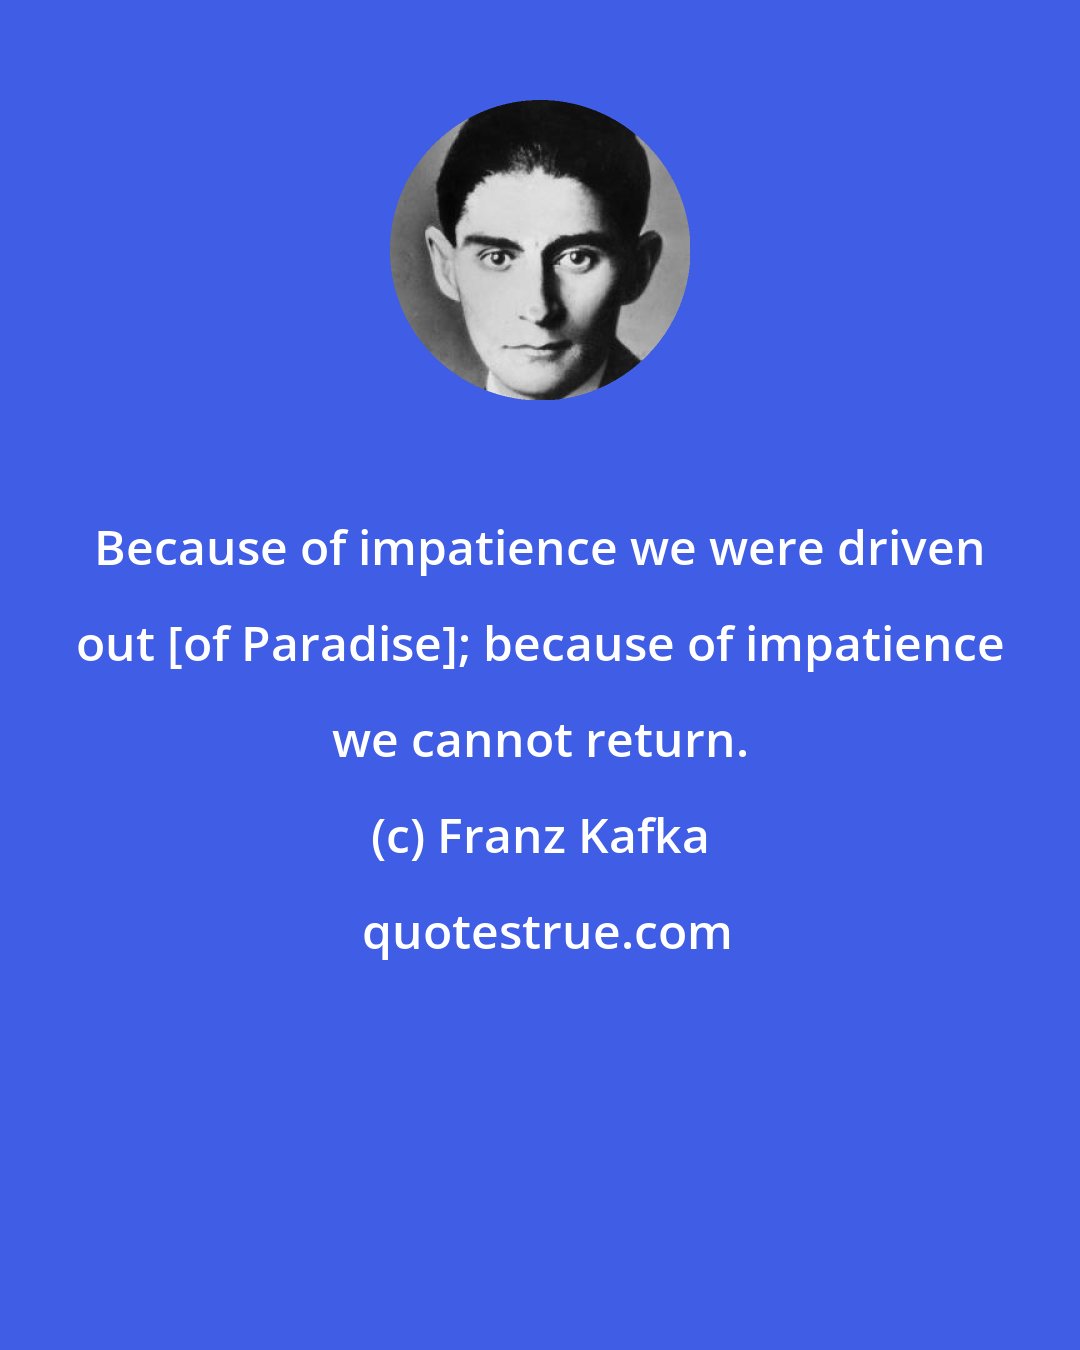 Franz Kafka: Because of impatience we were driven out [of Paradise]; because of impatience we cannot return.